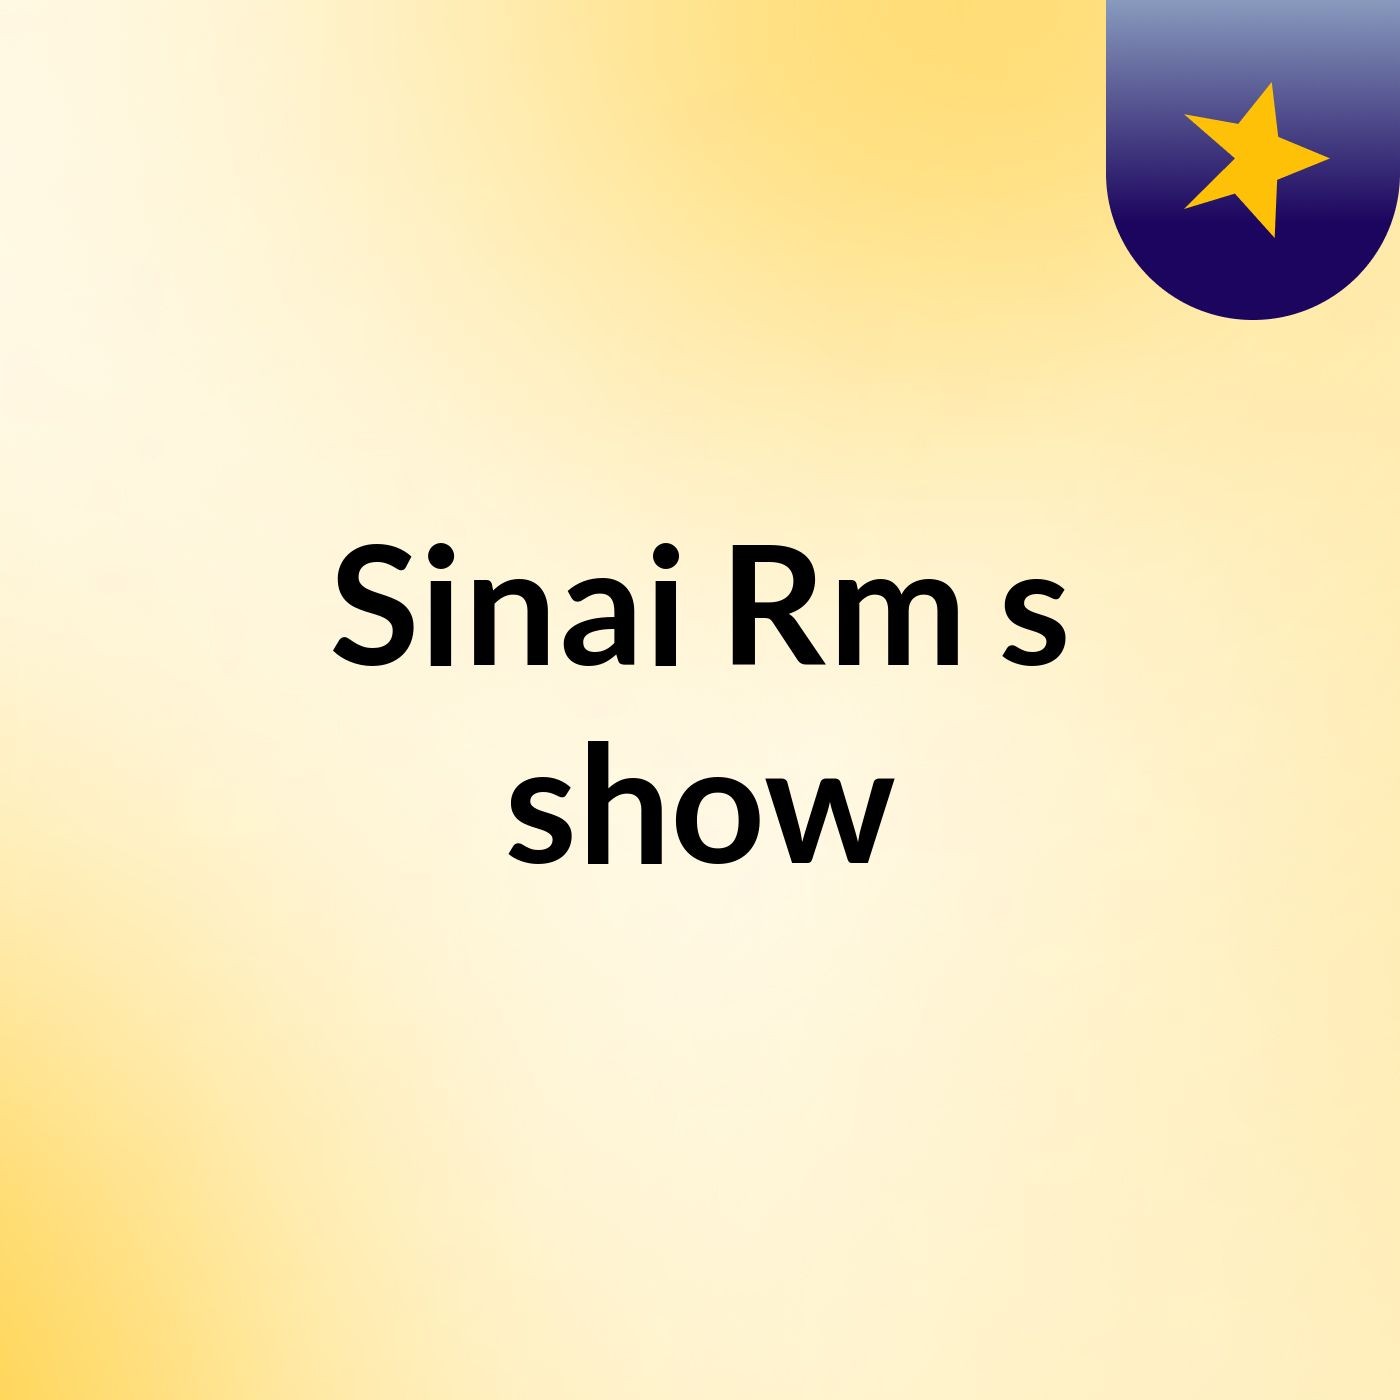 Sinai Rm's show